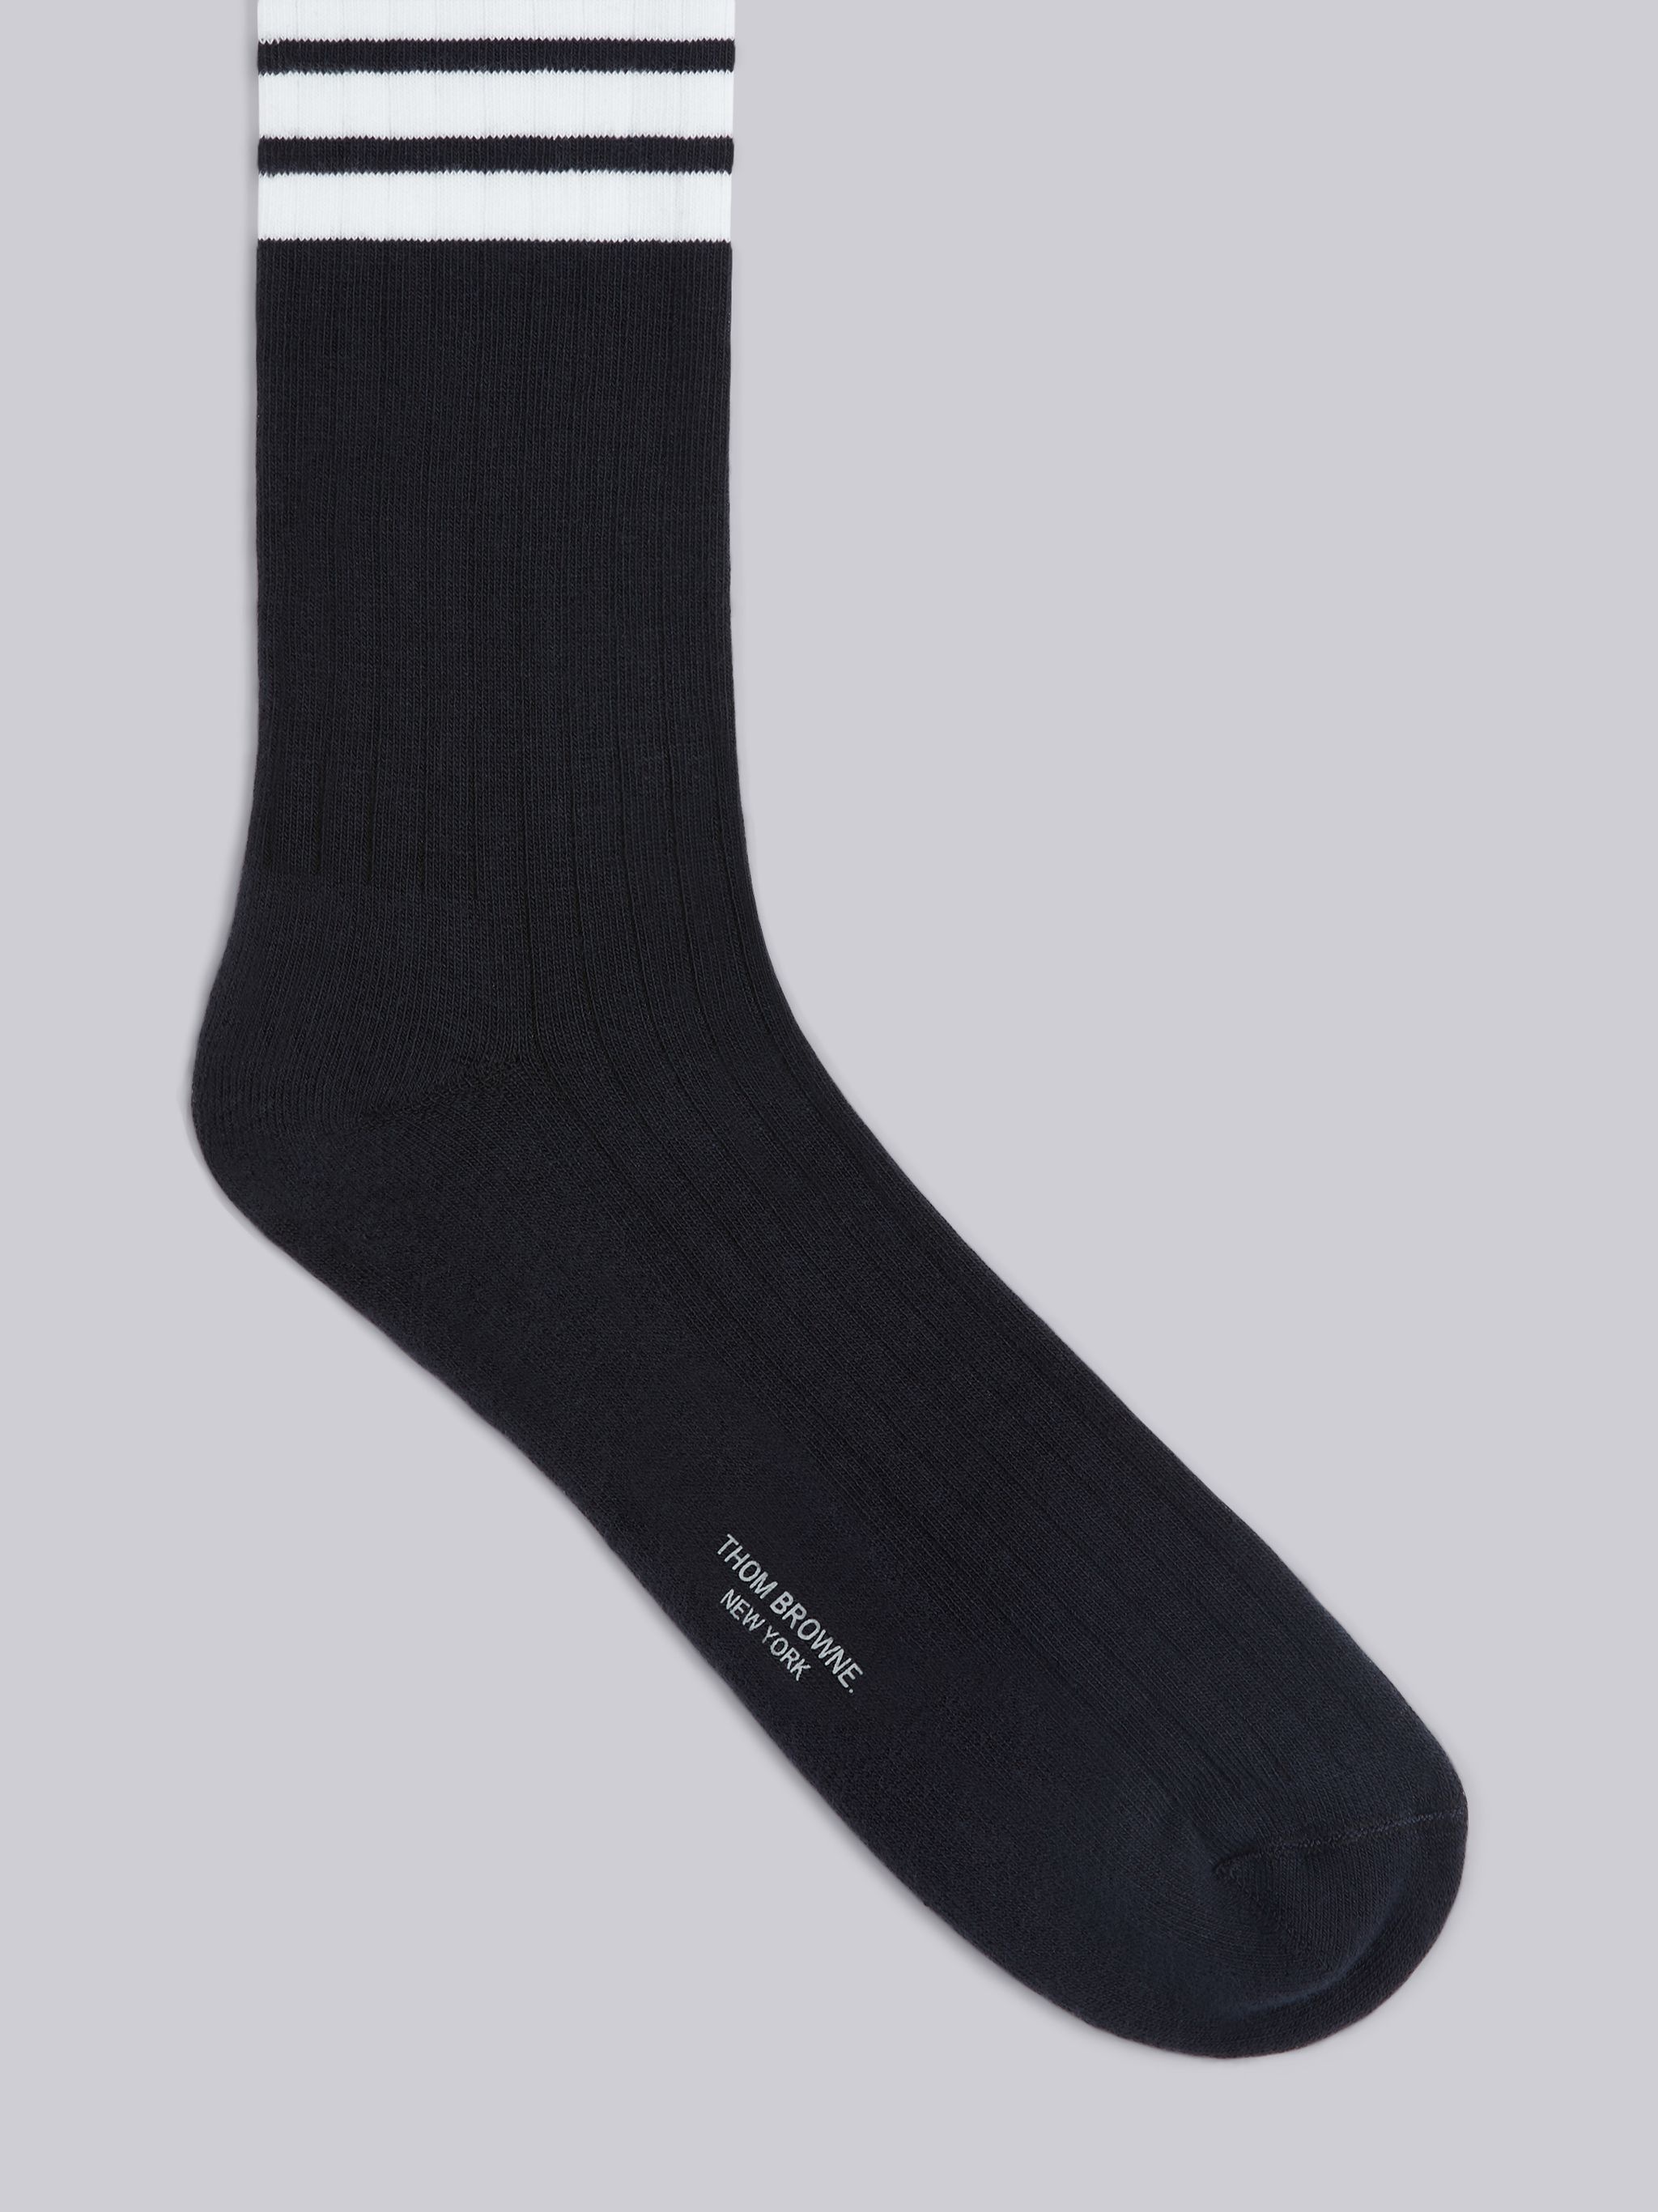 Navy Cotton Mid-Calf 4-Bar Socks - 2